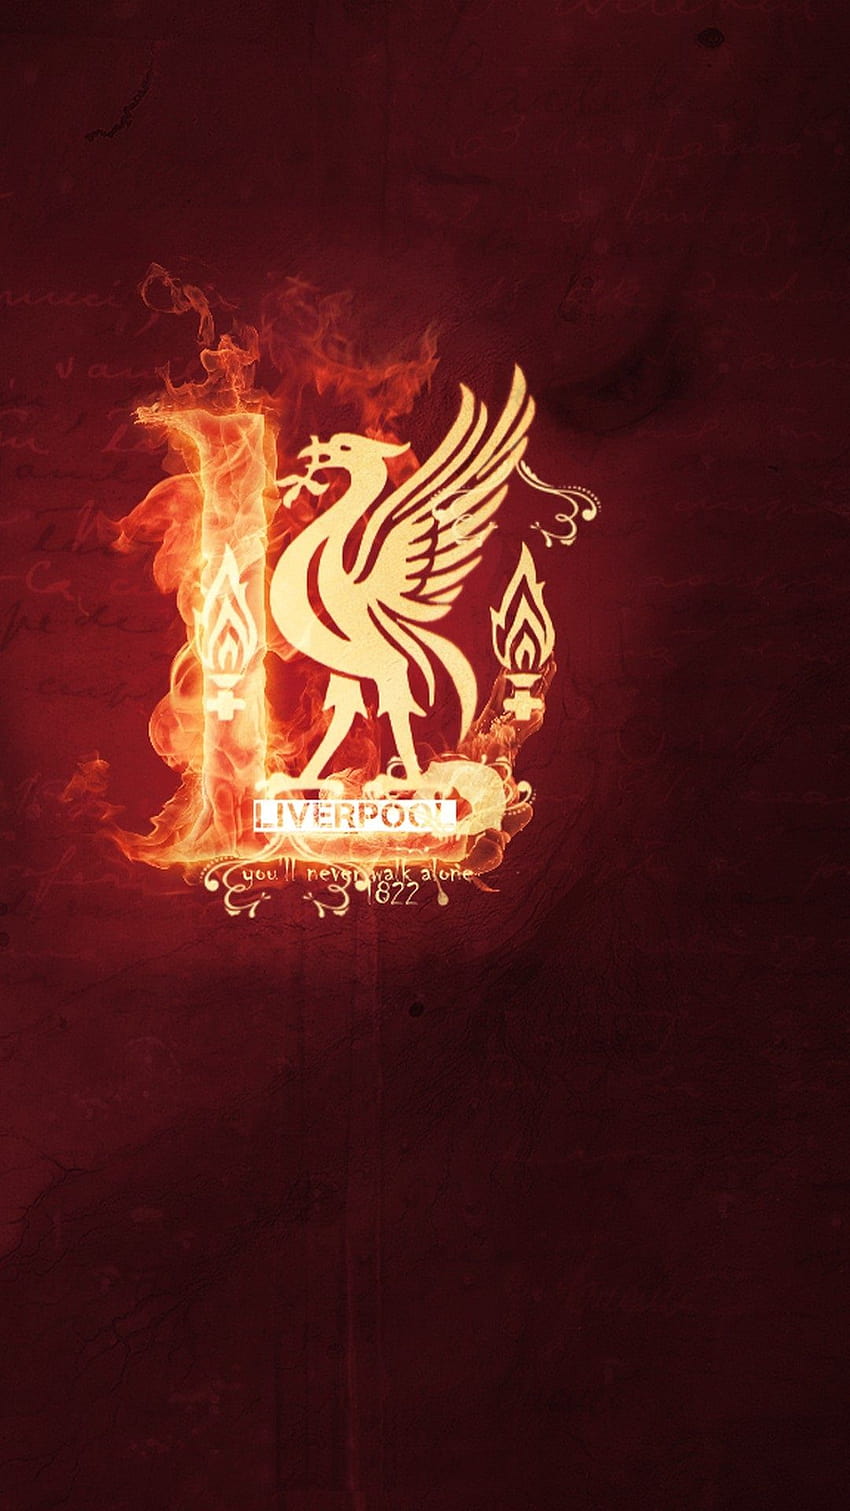 Liverpool F.C. Wallpaper | WhatsPaper